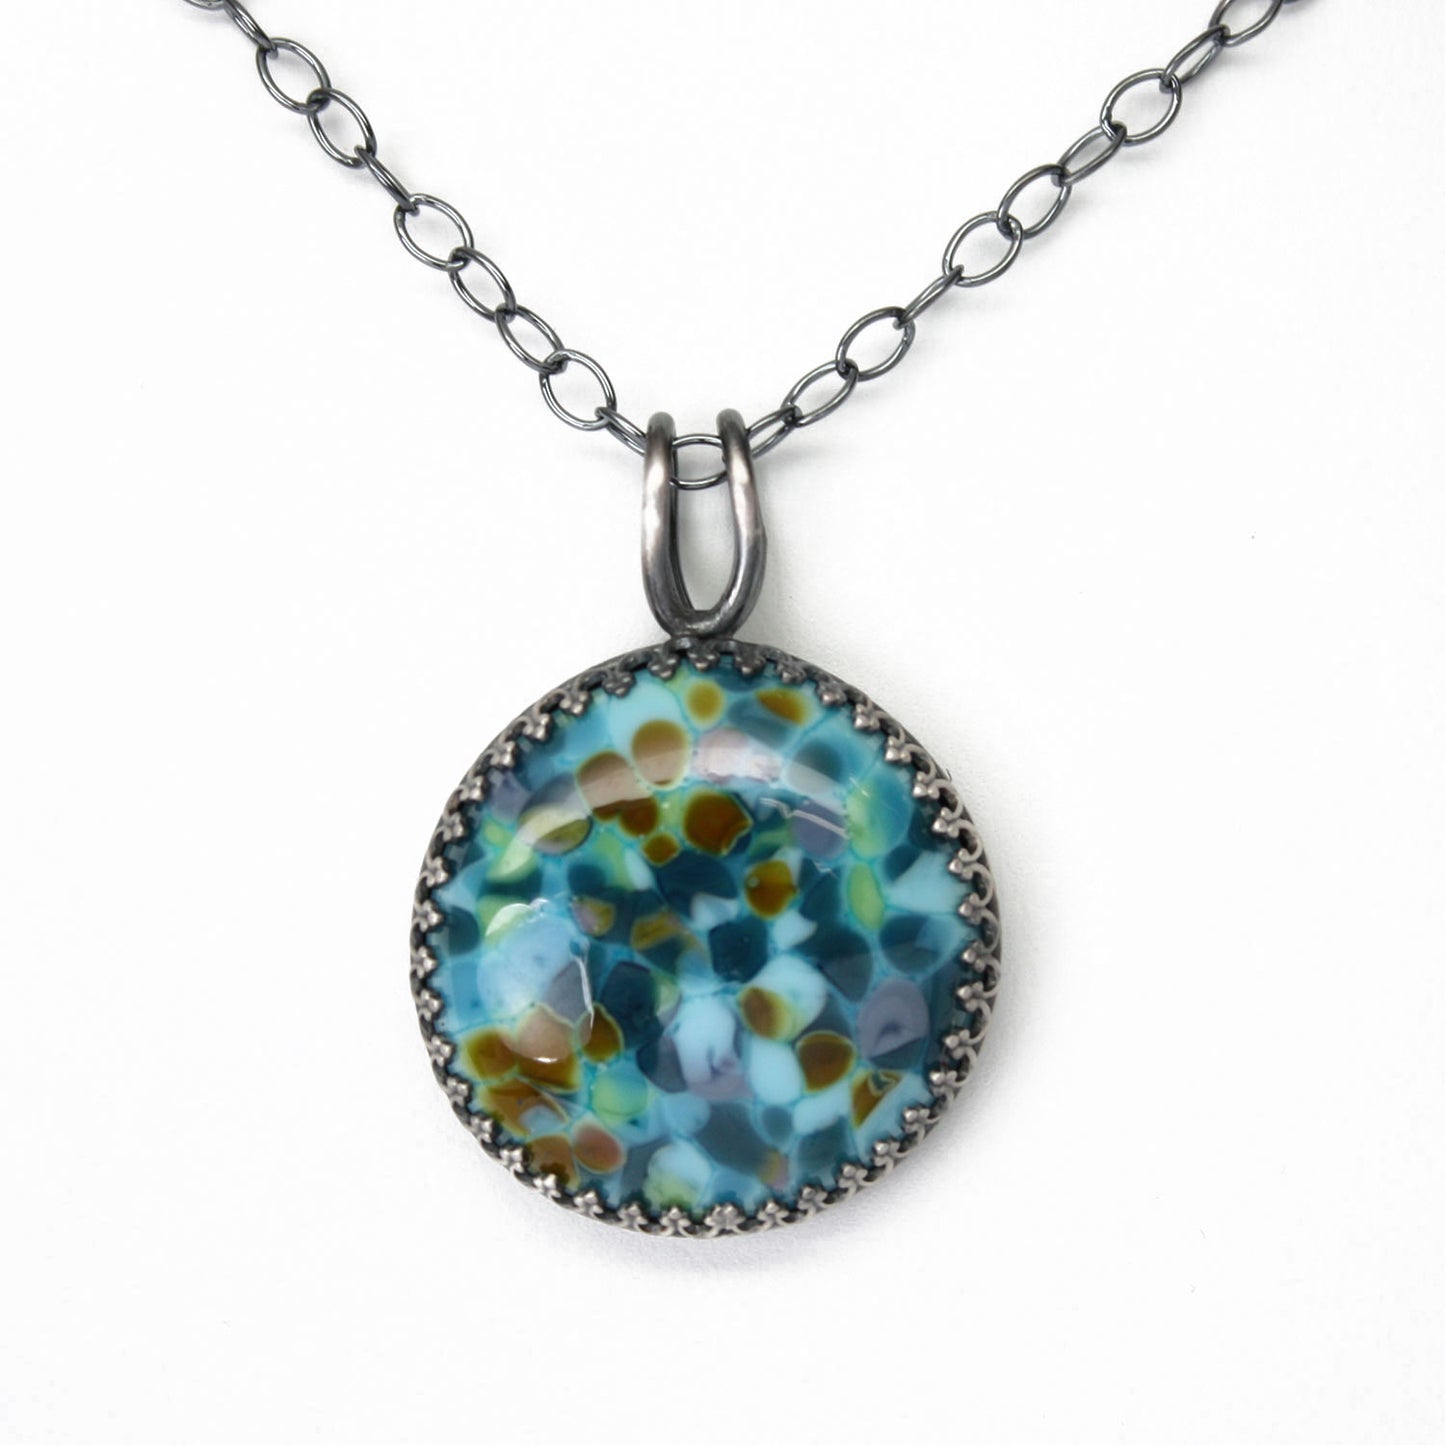 Handmade Blue Lampwork Glass Pendant Necklace